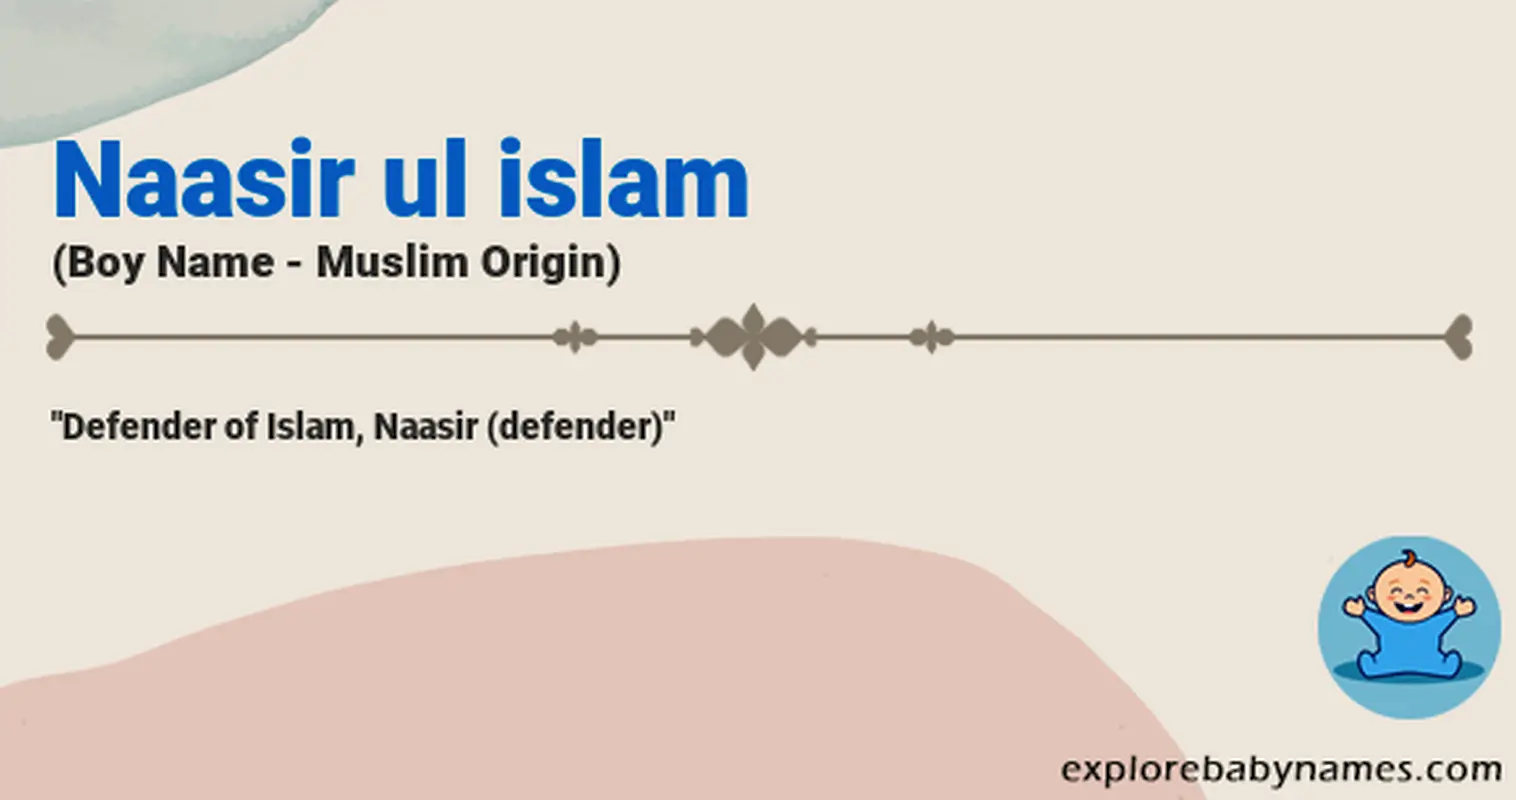 Meaning of Naasir ul islam